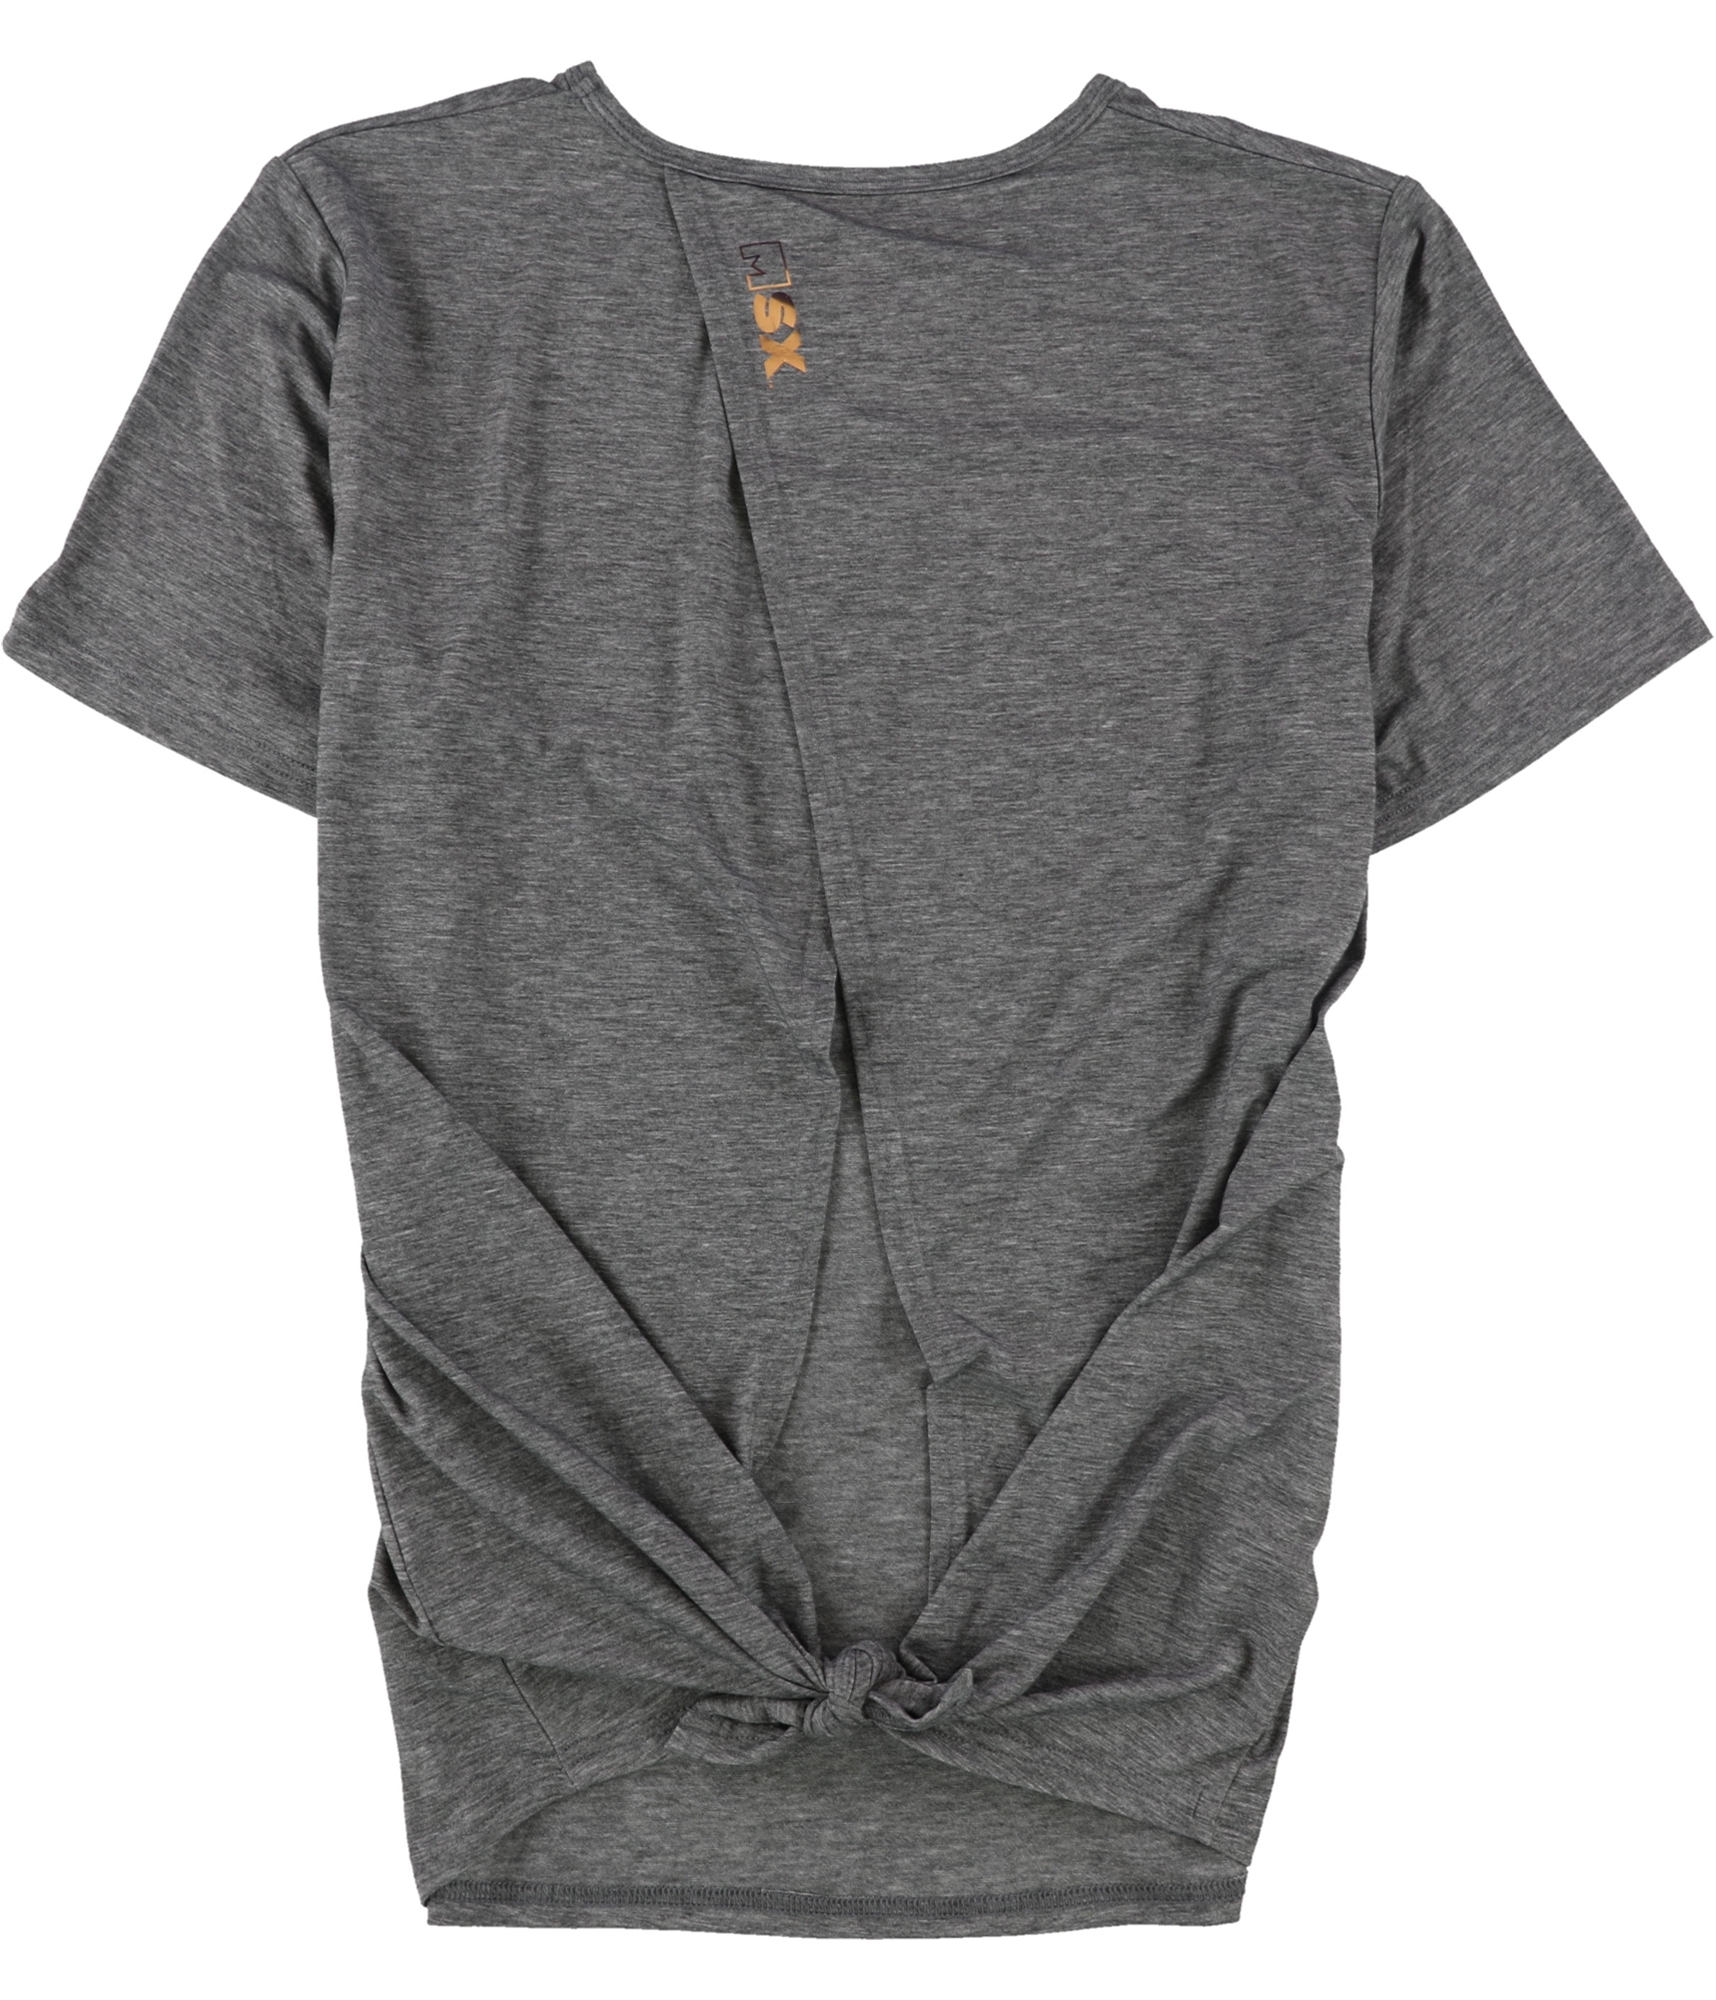 MSX Womens Baltimore Ravens Graphic T-Shirt, Grey, Small